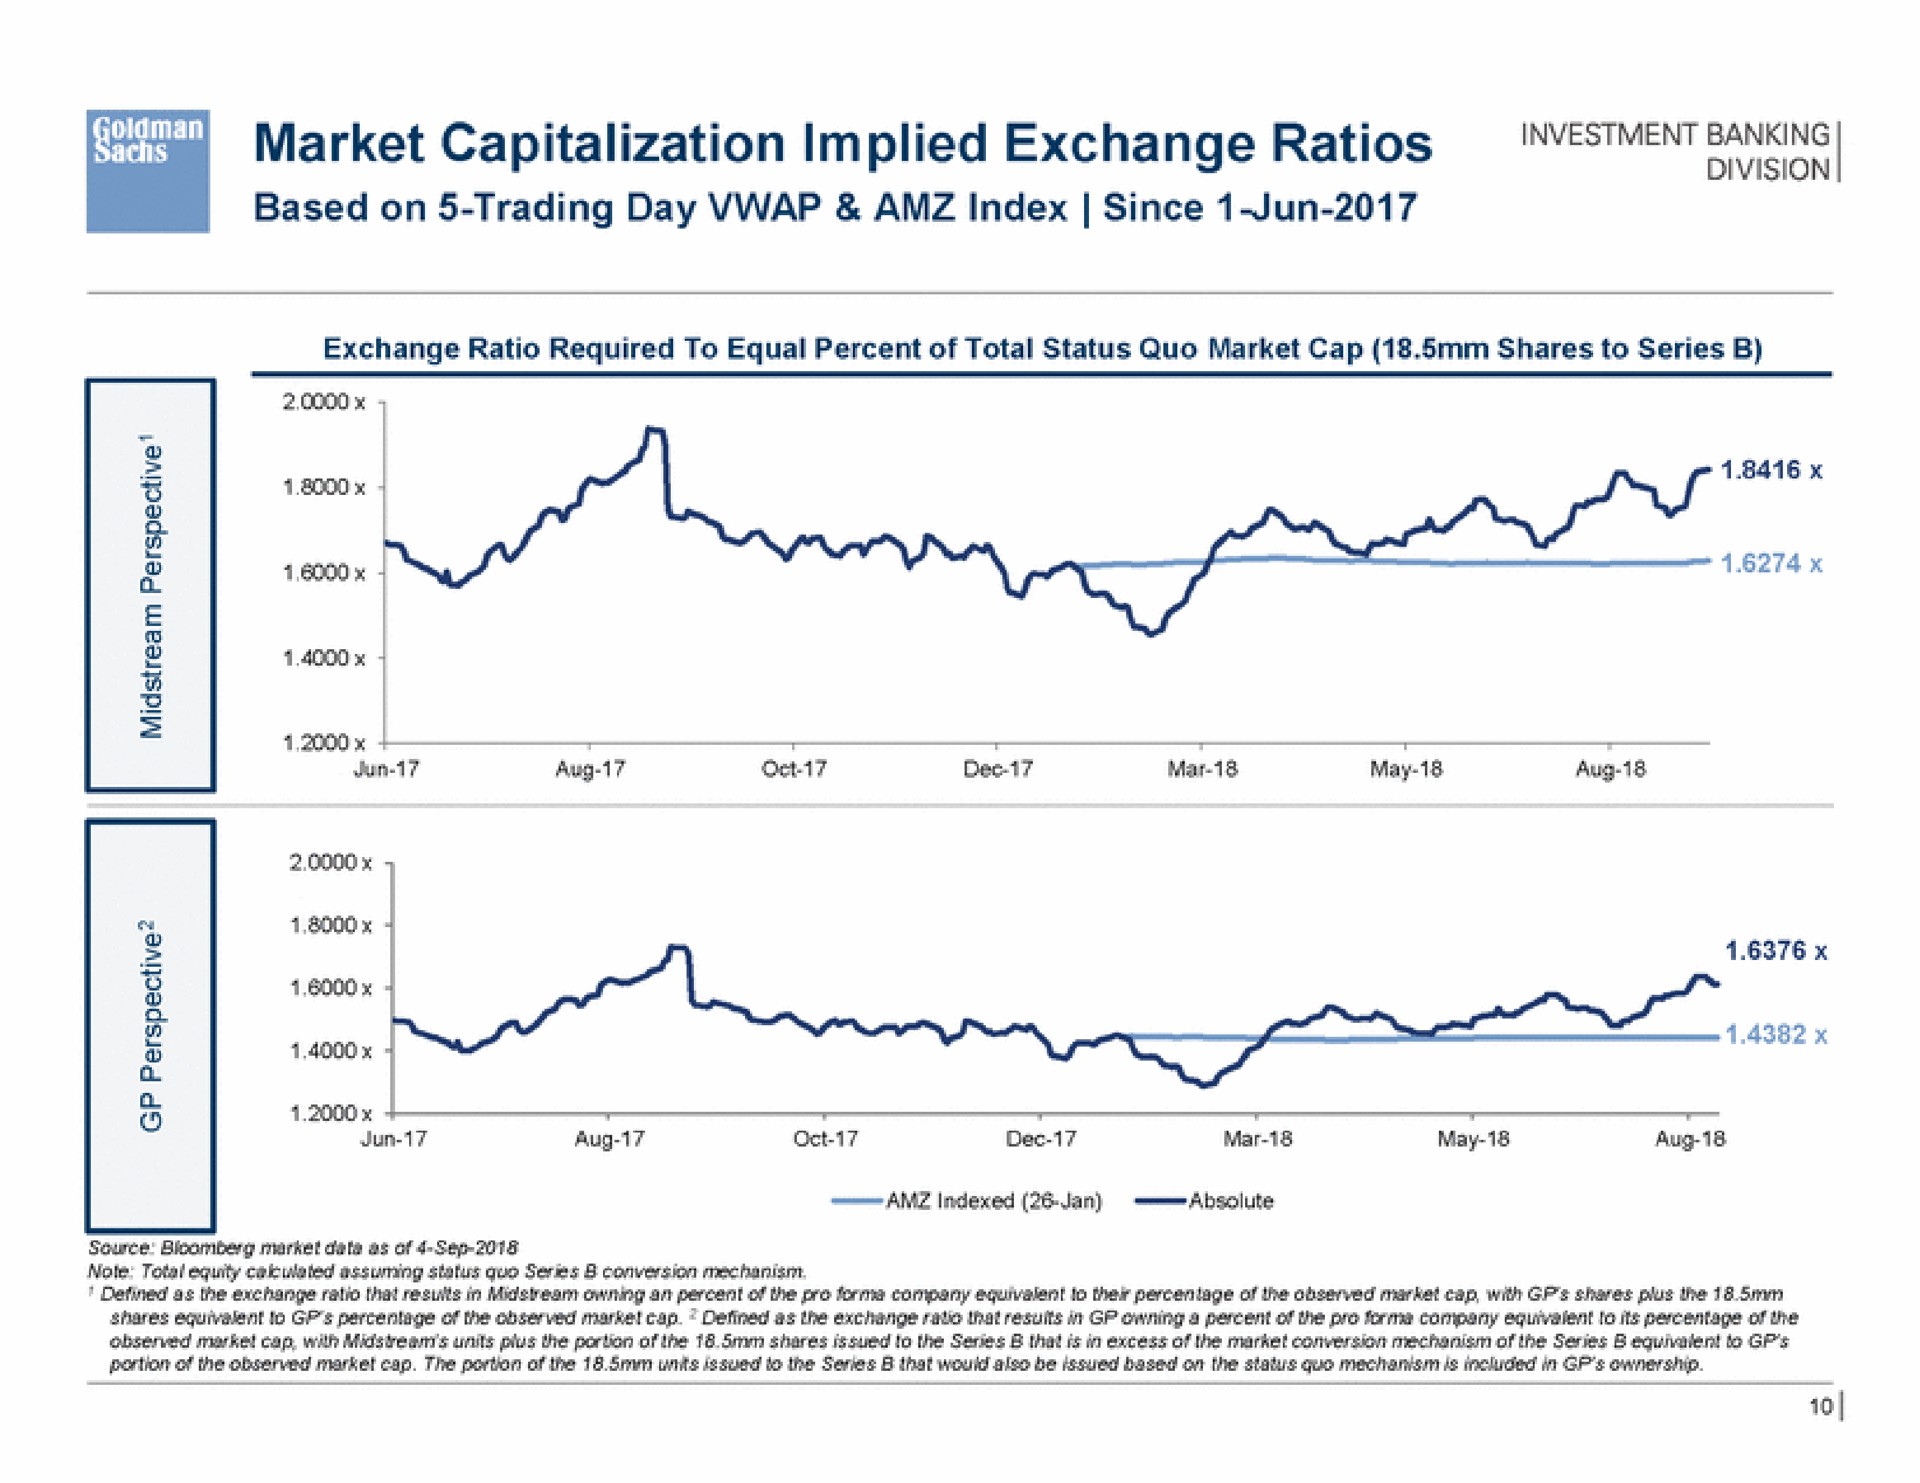 market capitalization implied exchange ratios | Goldman Sachs